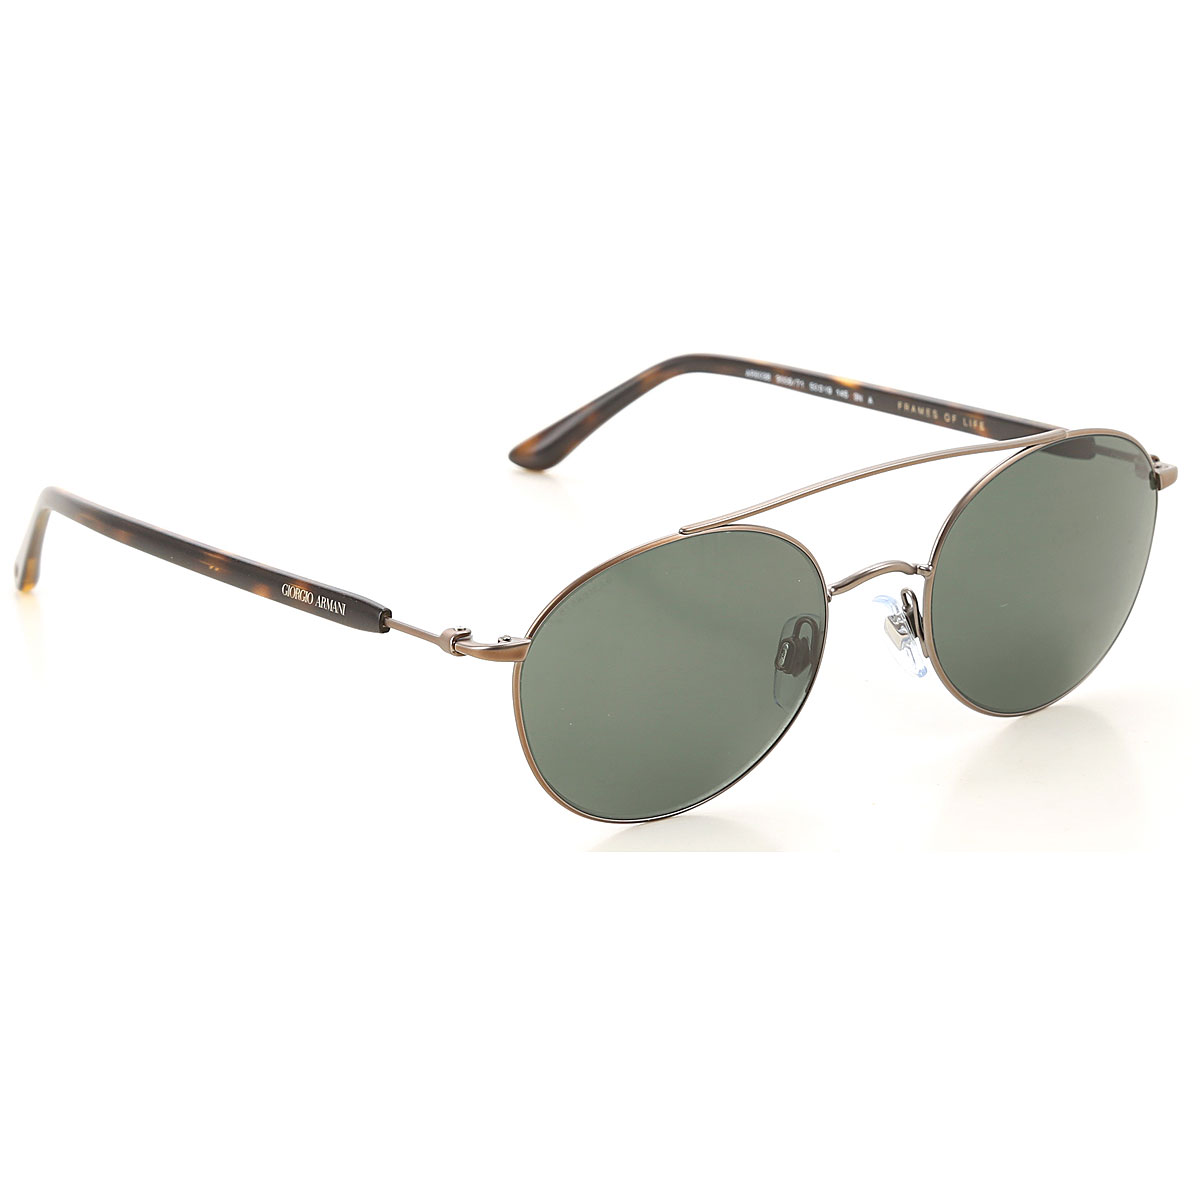 Sunglasses Giorgio Armani, Style code: ar6038-3006-71